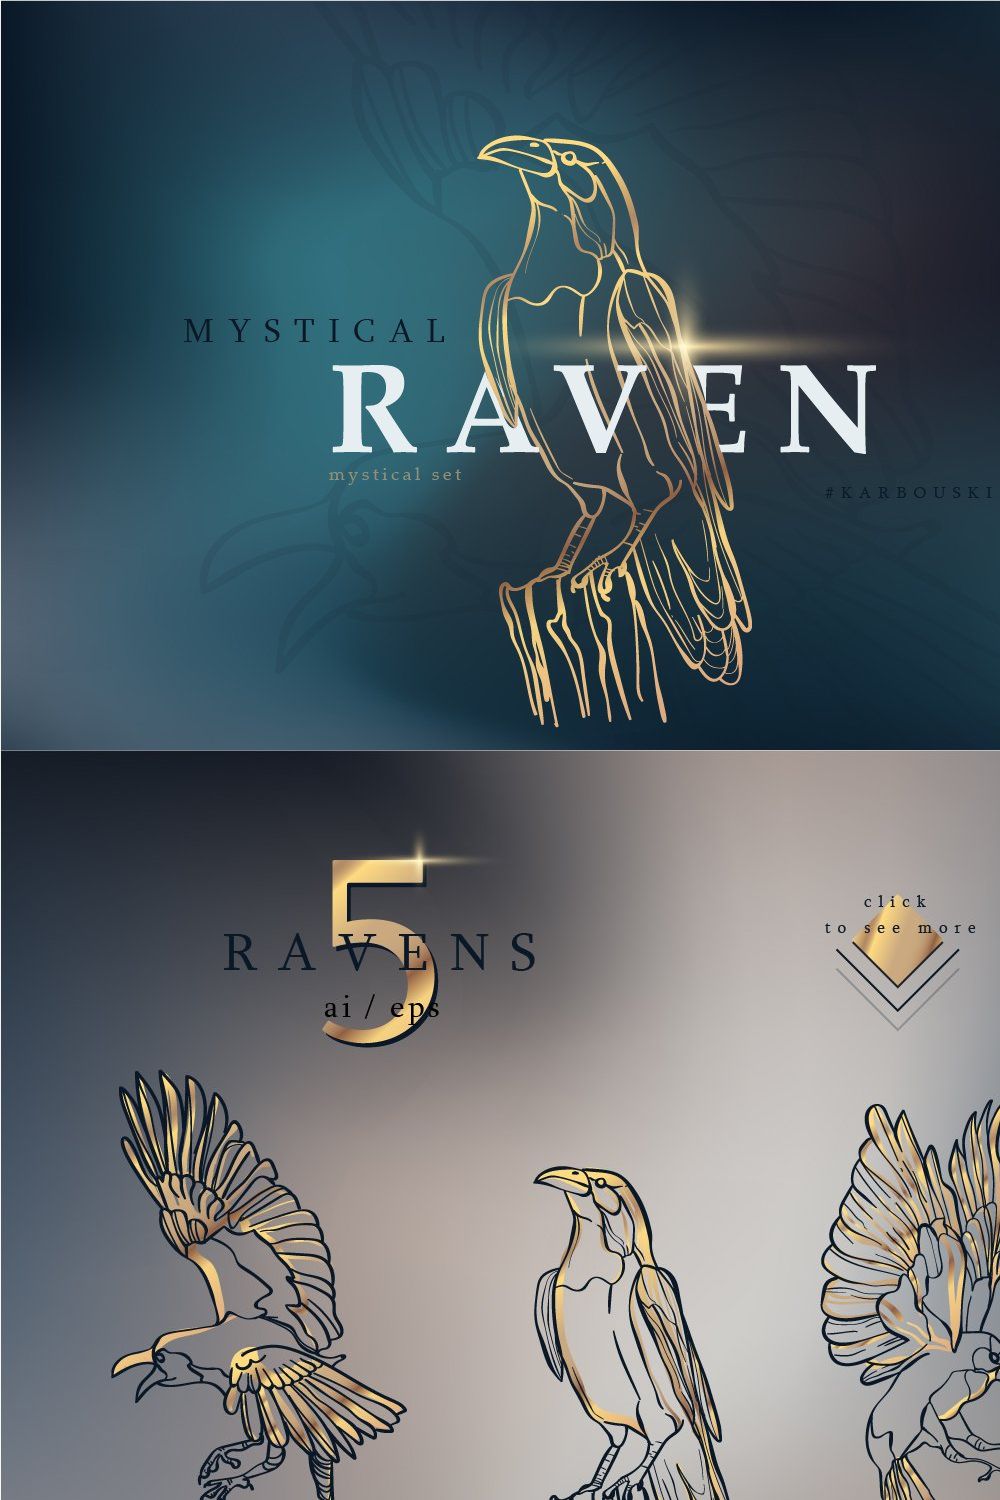 Mystical ravens pinterest preview image.